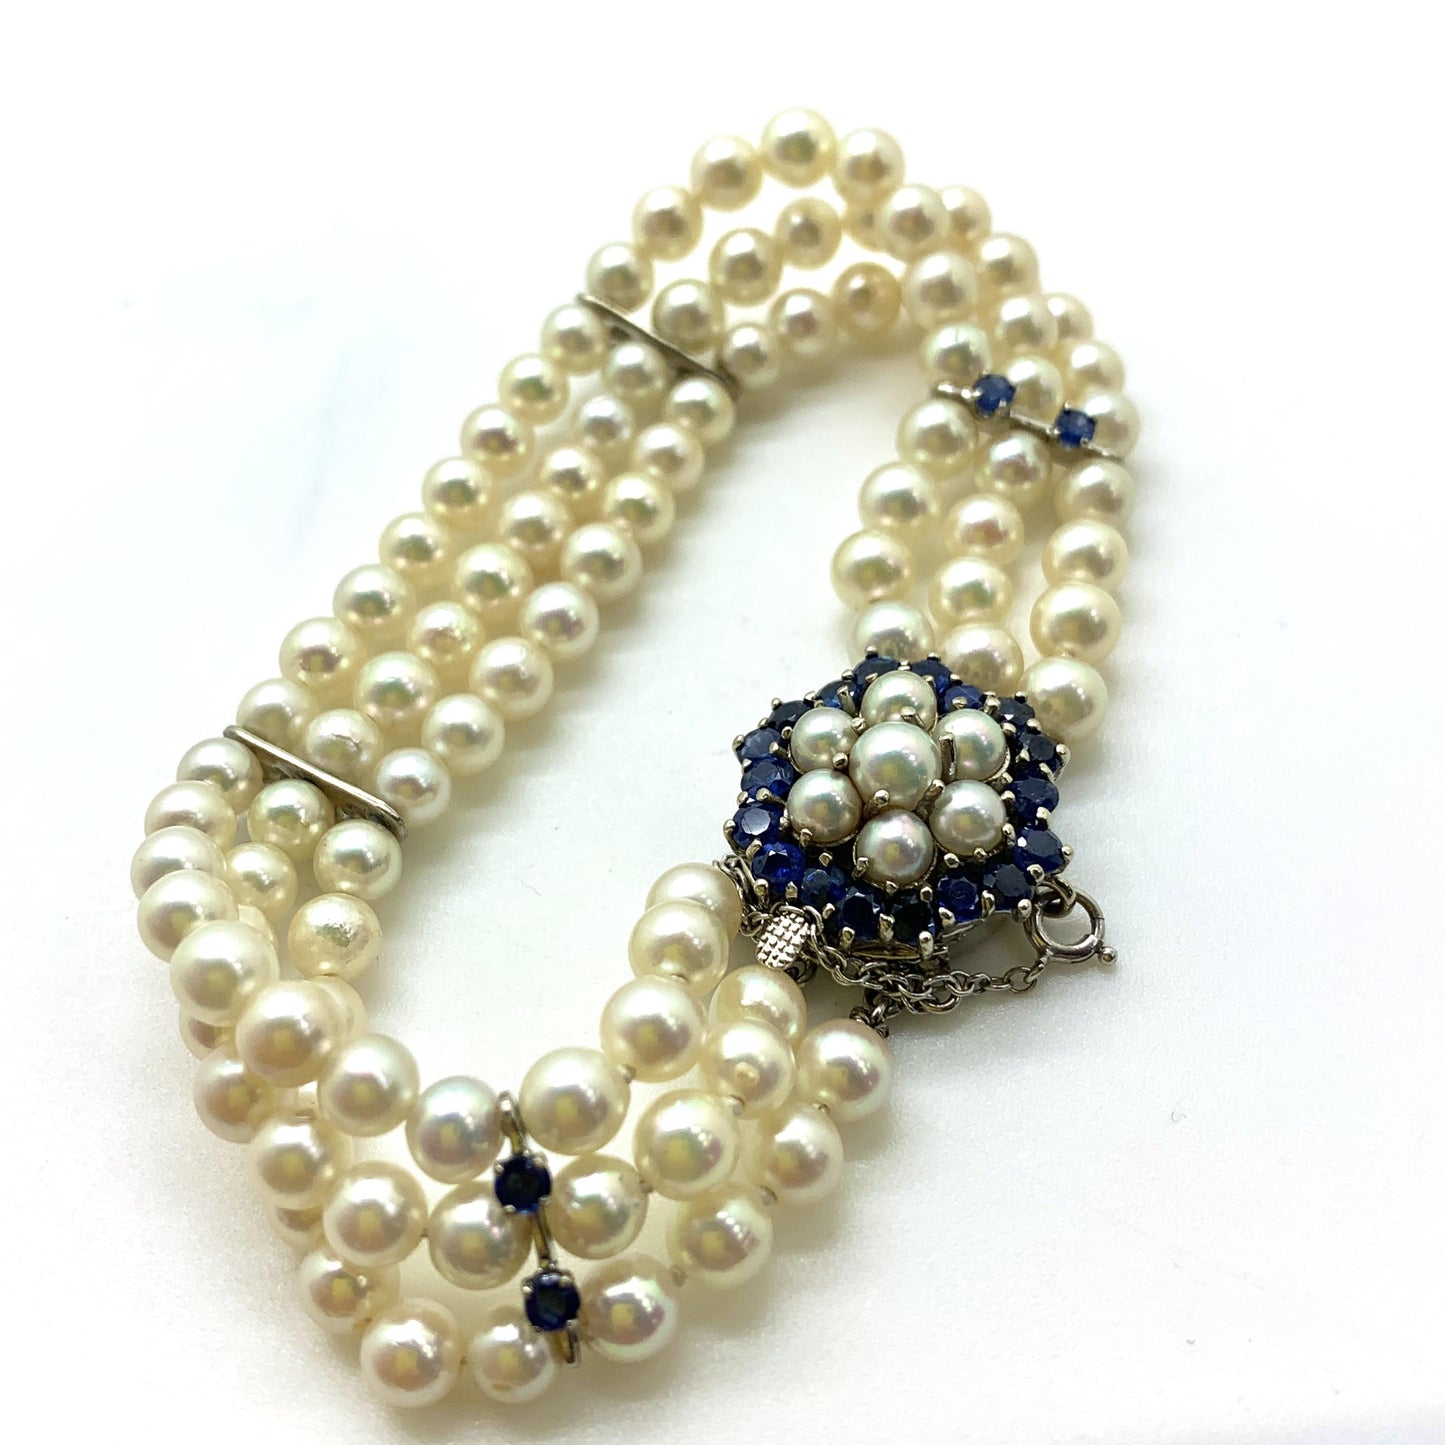 1.56 cttw Blue Sapphire Pearl Bracelet in 14k White Gold